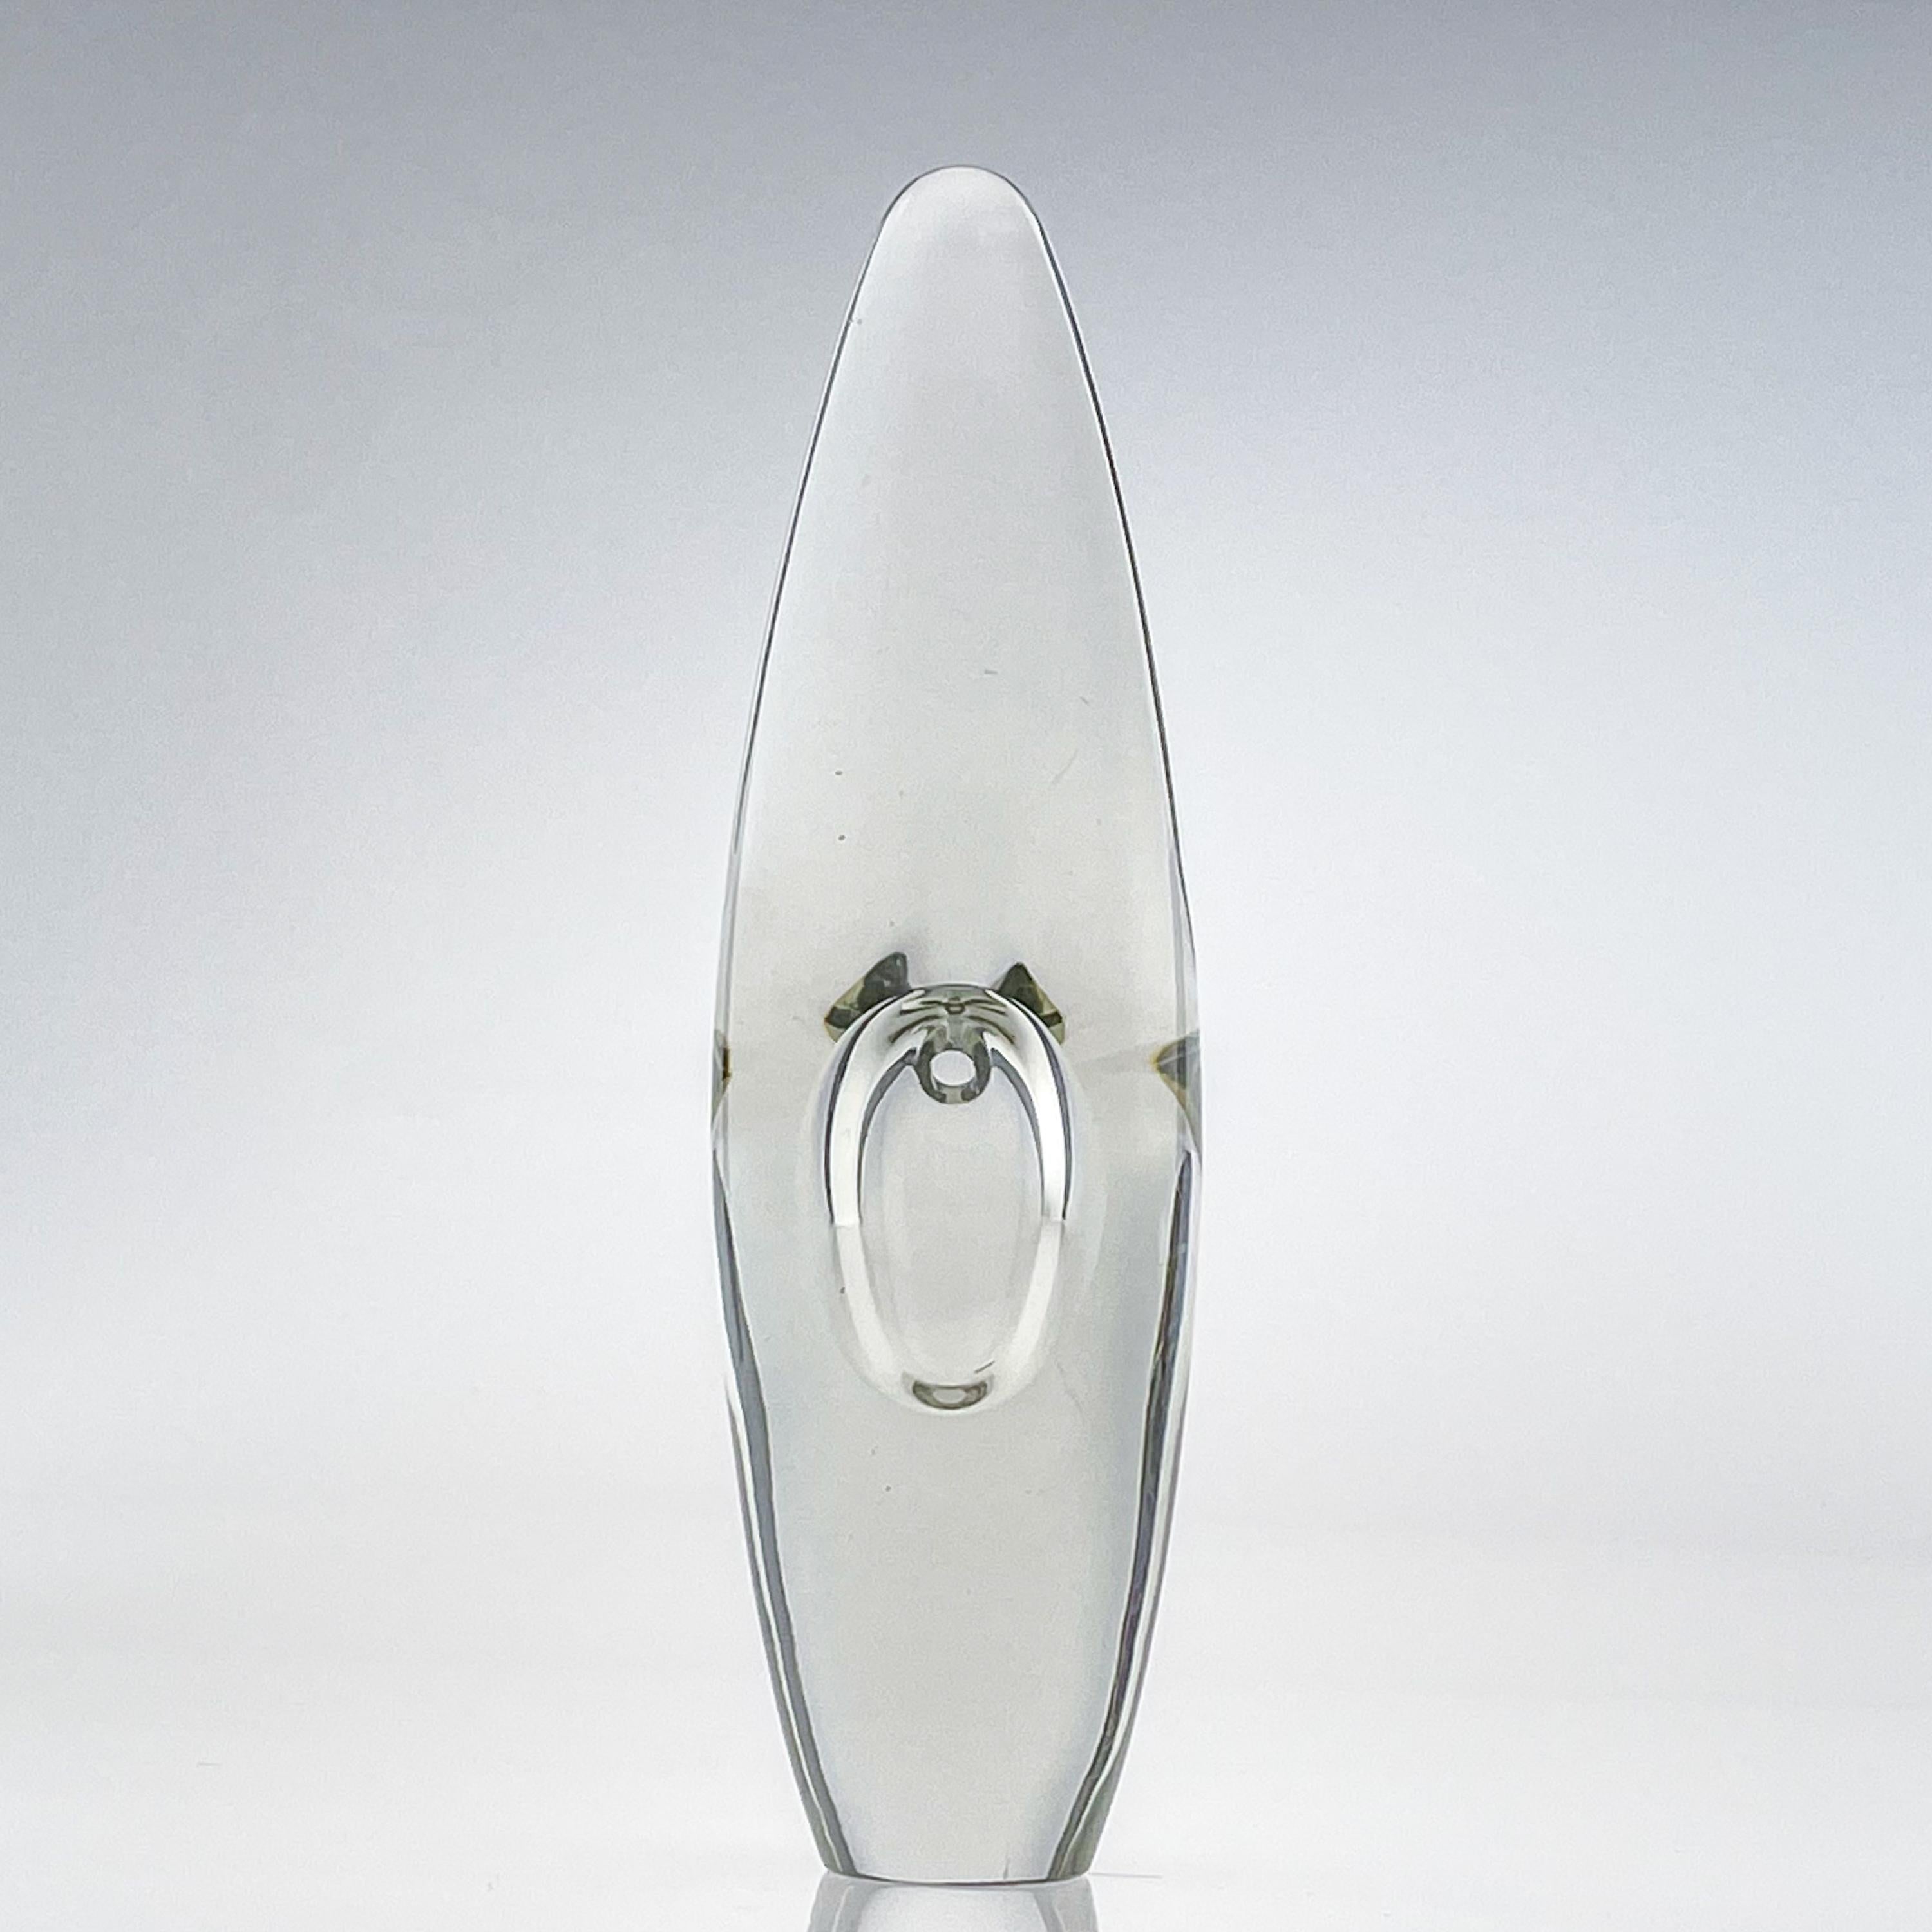 Mid-20th Century Scandinavian Modern Timo Sarpaneva Crystal Art Sculpture Orchid Handblown 1957 For Sale